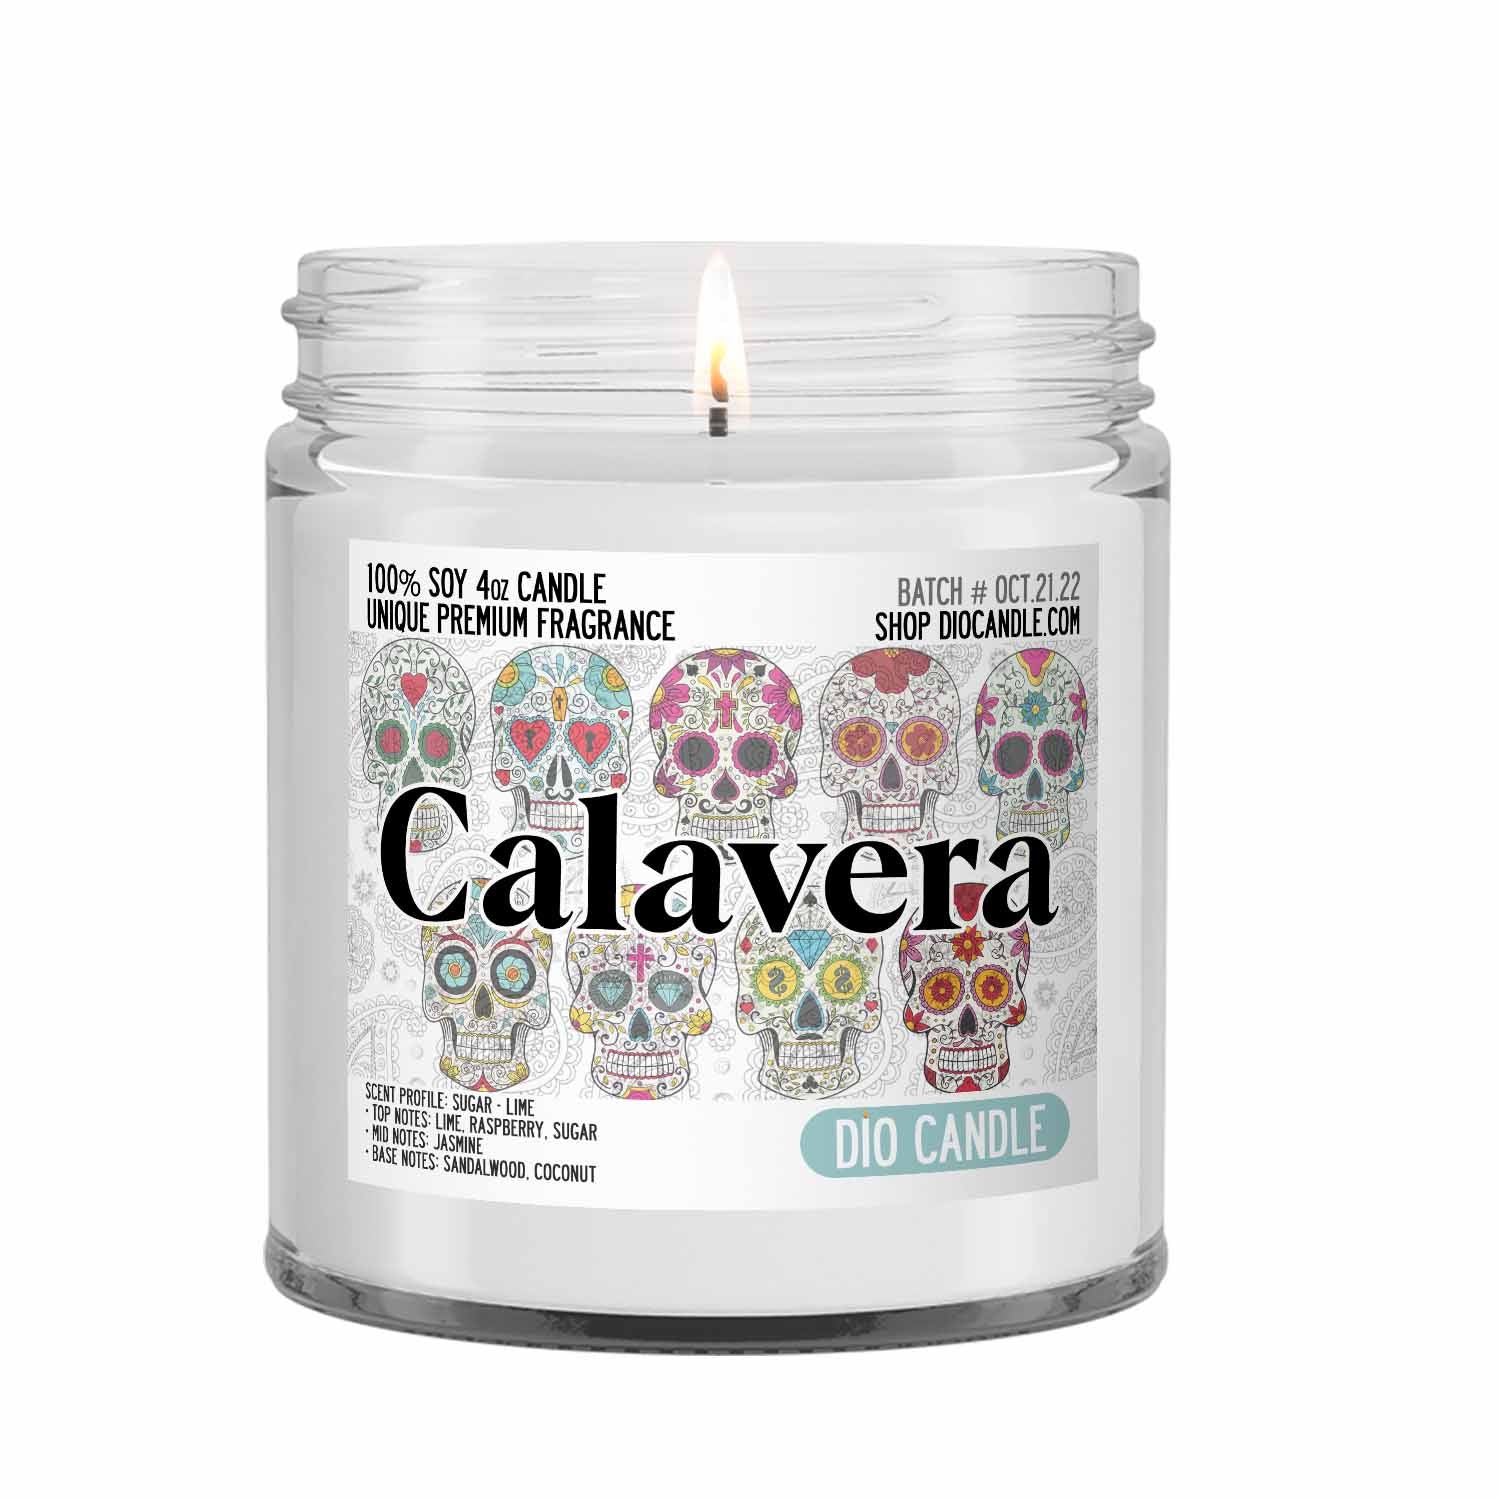 Calavera Candle